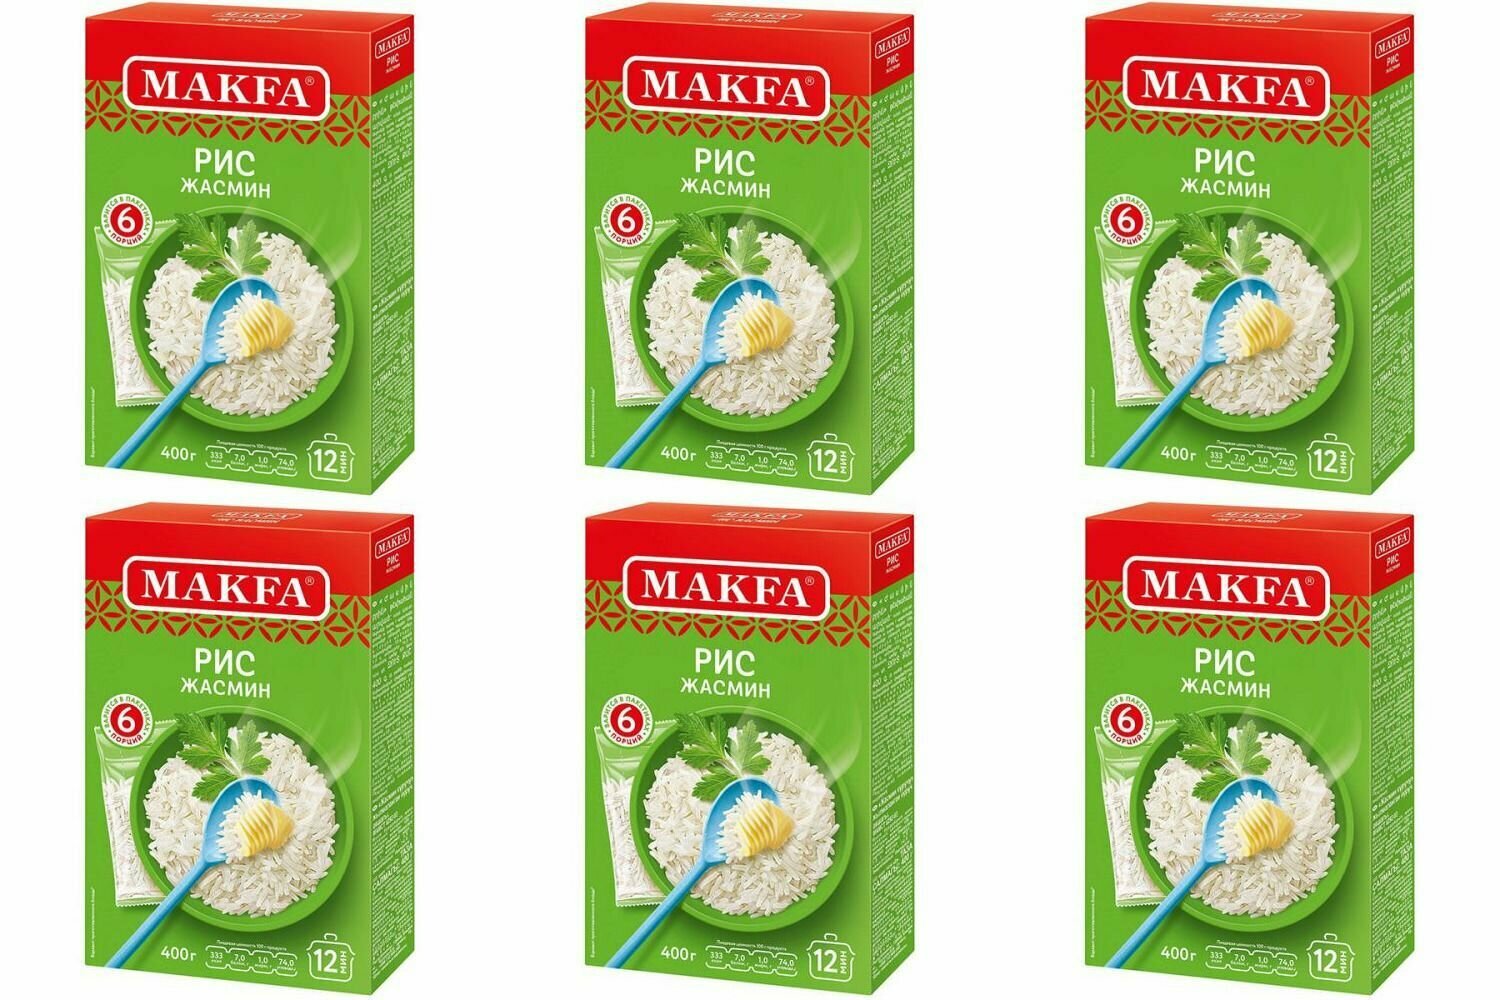 Makfa Крупа рис шлифованный Жасмин, 6 пакетов, 400 г, 6 уп - фотография № 1